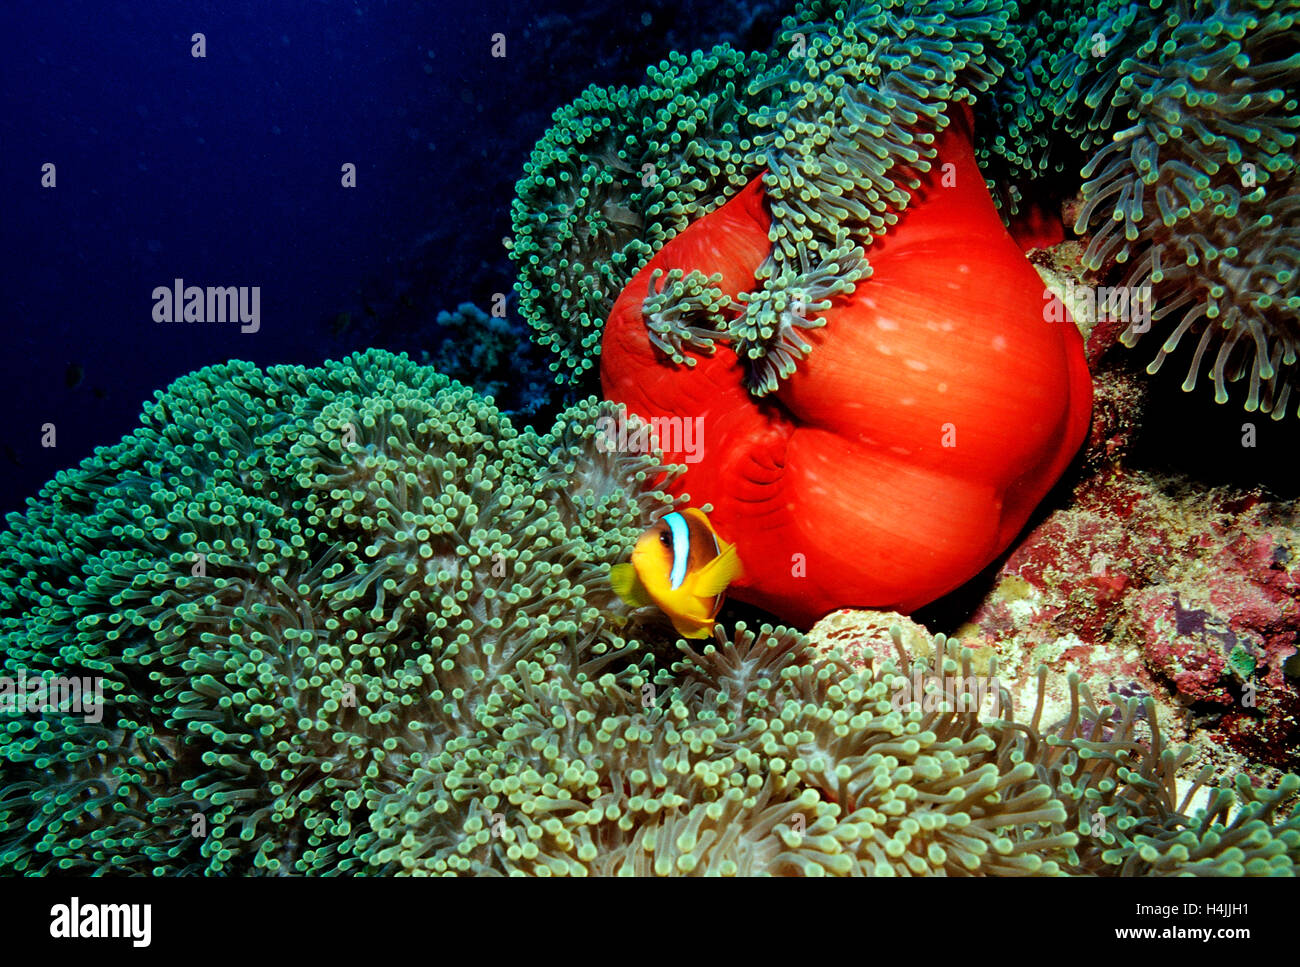 Clark's anemonefish (Amphiprion clarkii) in anemone, Red Sea, Sudan Stock Photo